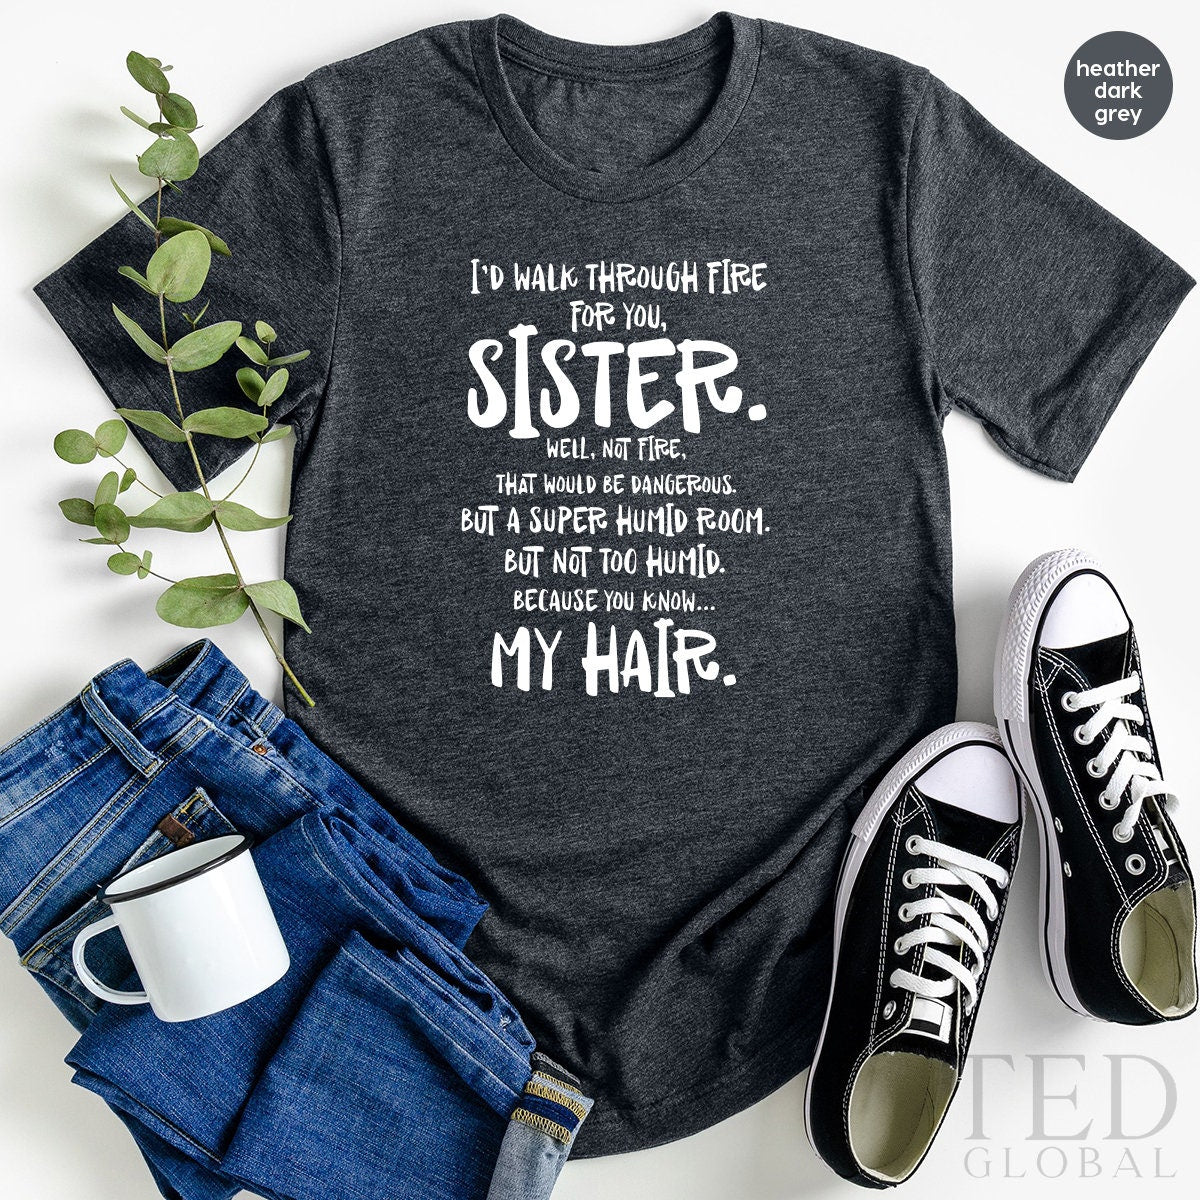 Funny Sister T Shirt, Sister Birthday Gift, Sassy Saying Shirt, Sarcastic Sister TShirt, Sisters T-Shirt, Gifts For Sister - Fastdeliverytees.com